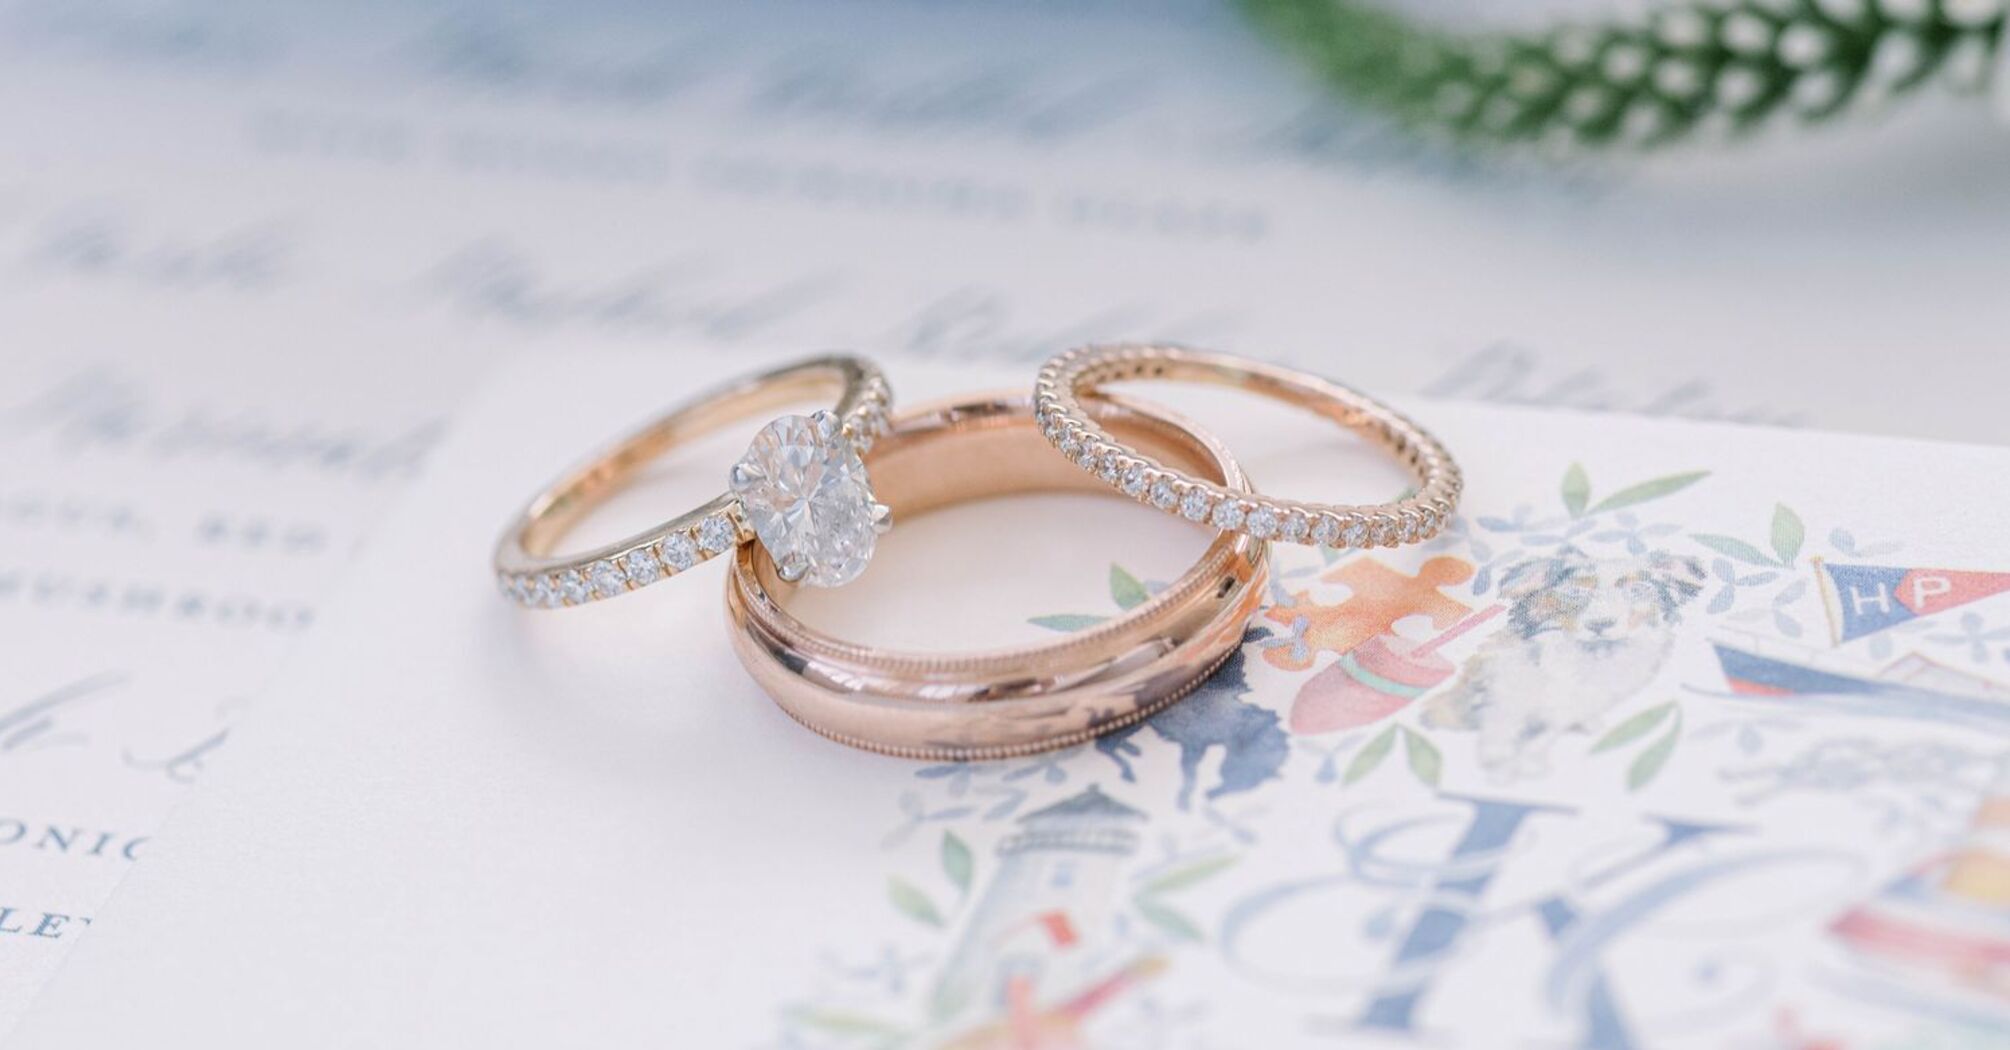 Five prohibited actions regarding wedding rings